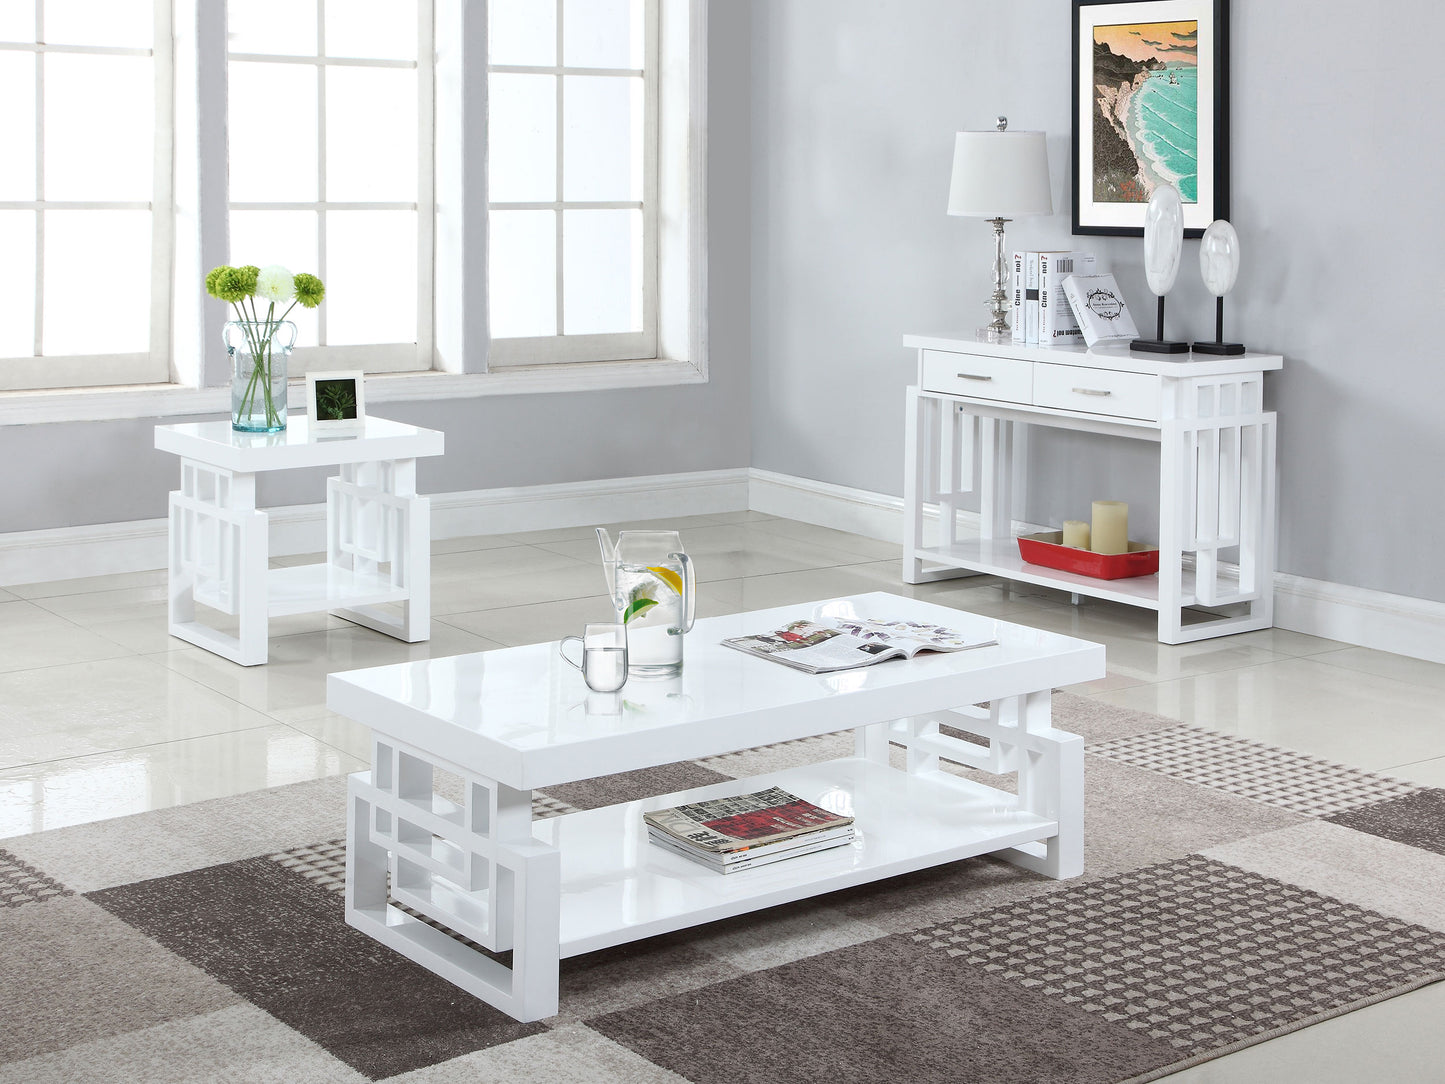 Schmitt Rectangular End Table High Glossy White